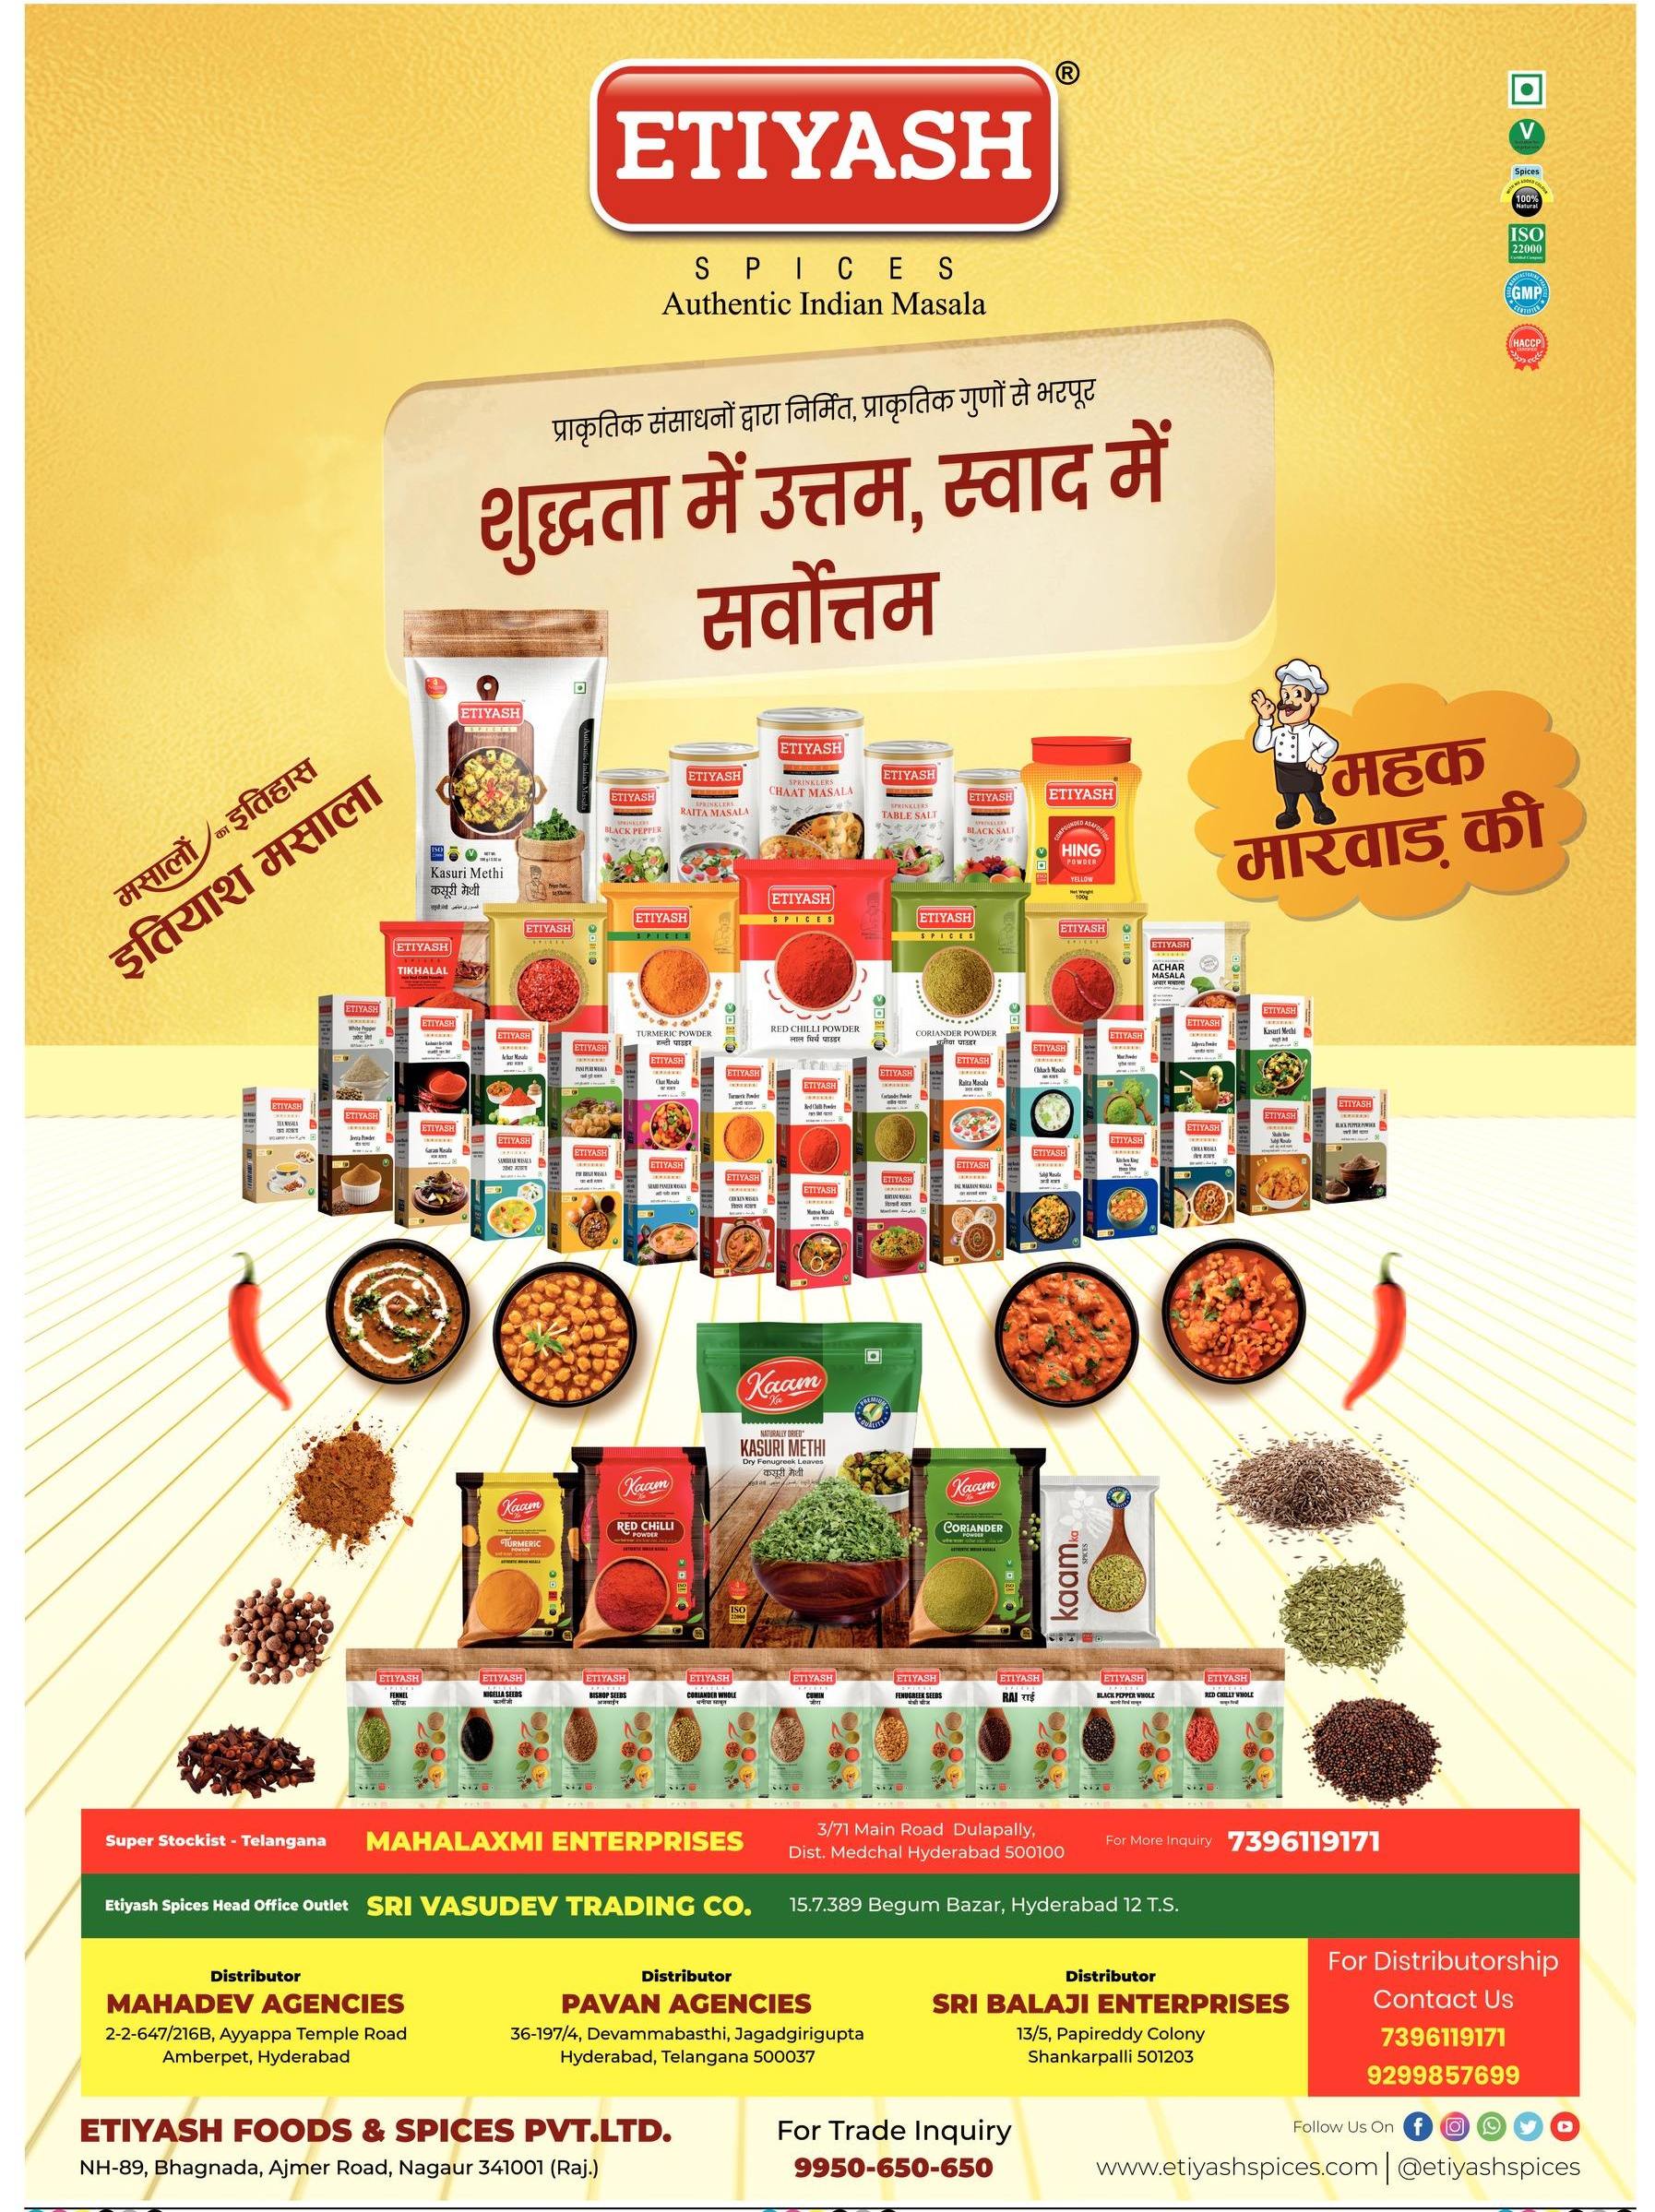 etiyash-spices-authentic-indian-masala-mehak-marward-ki-ad-hindi-milap-hyderabad-9-7-2021